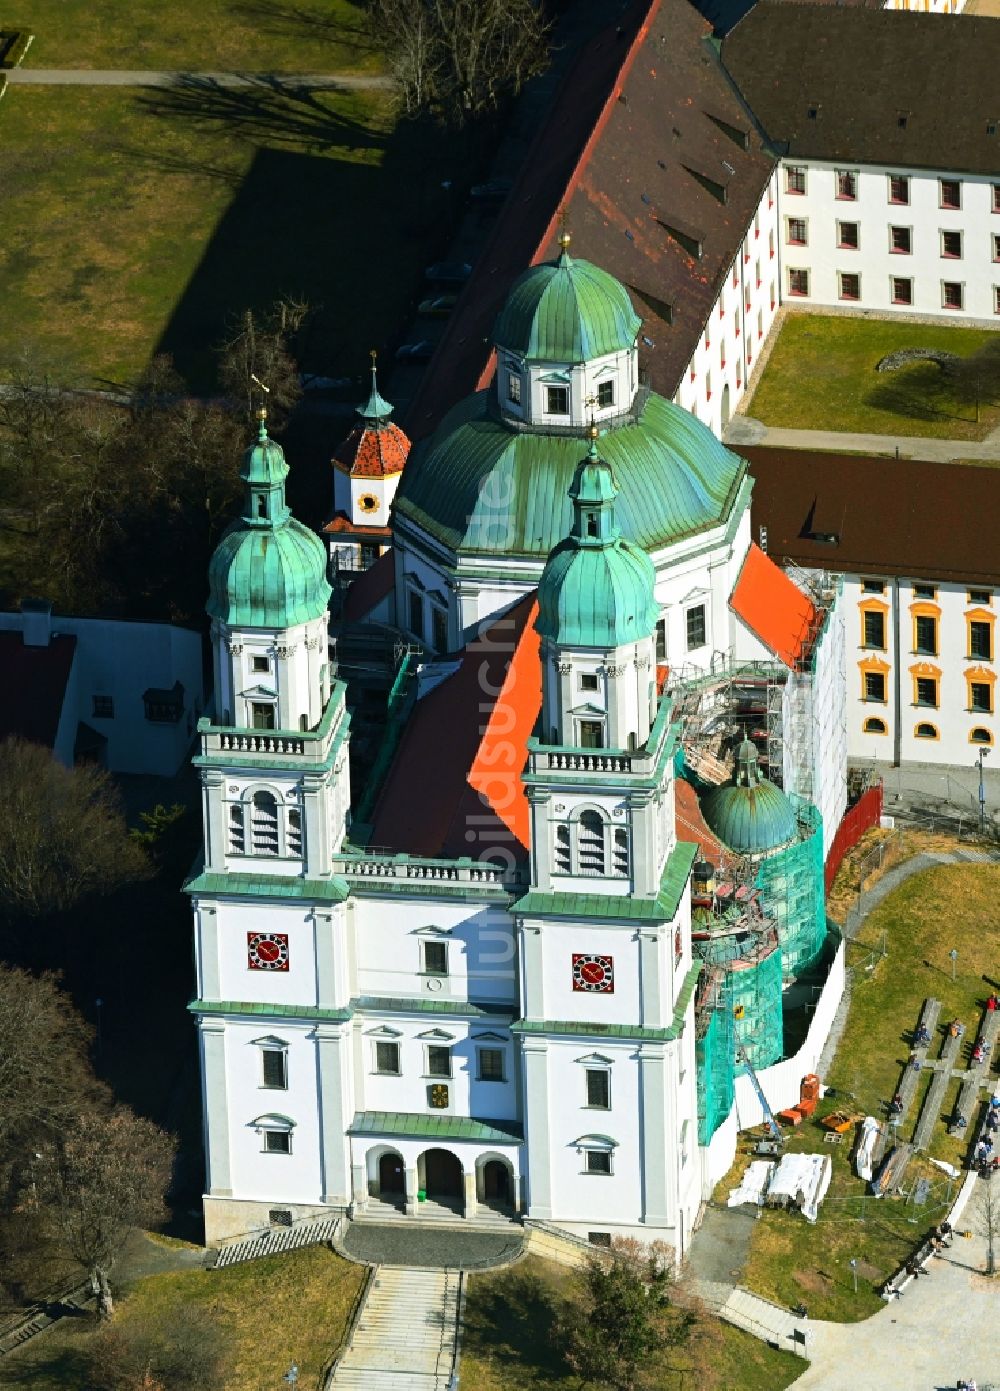 Luftbild Kempten (Allgäu) - Kirchengebäude Basilika St. Lorenz in Kempten (Allgäu) im Bundesland Bayern, Deutschland